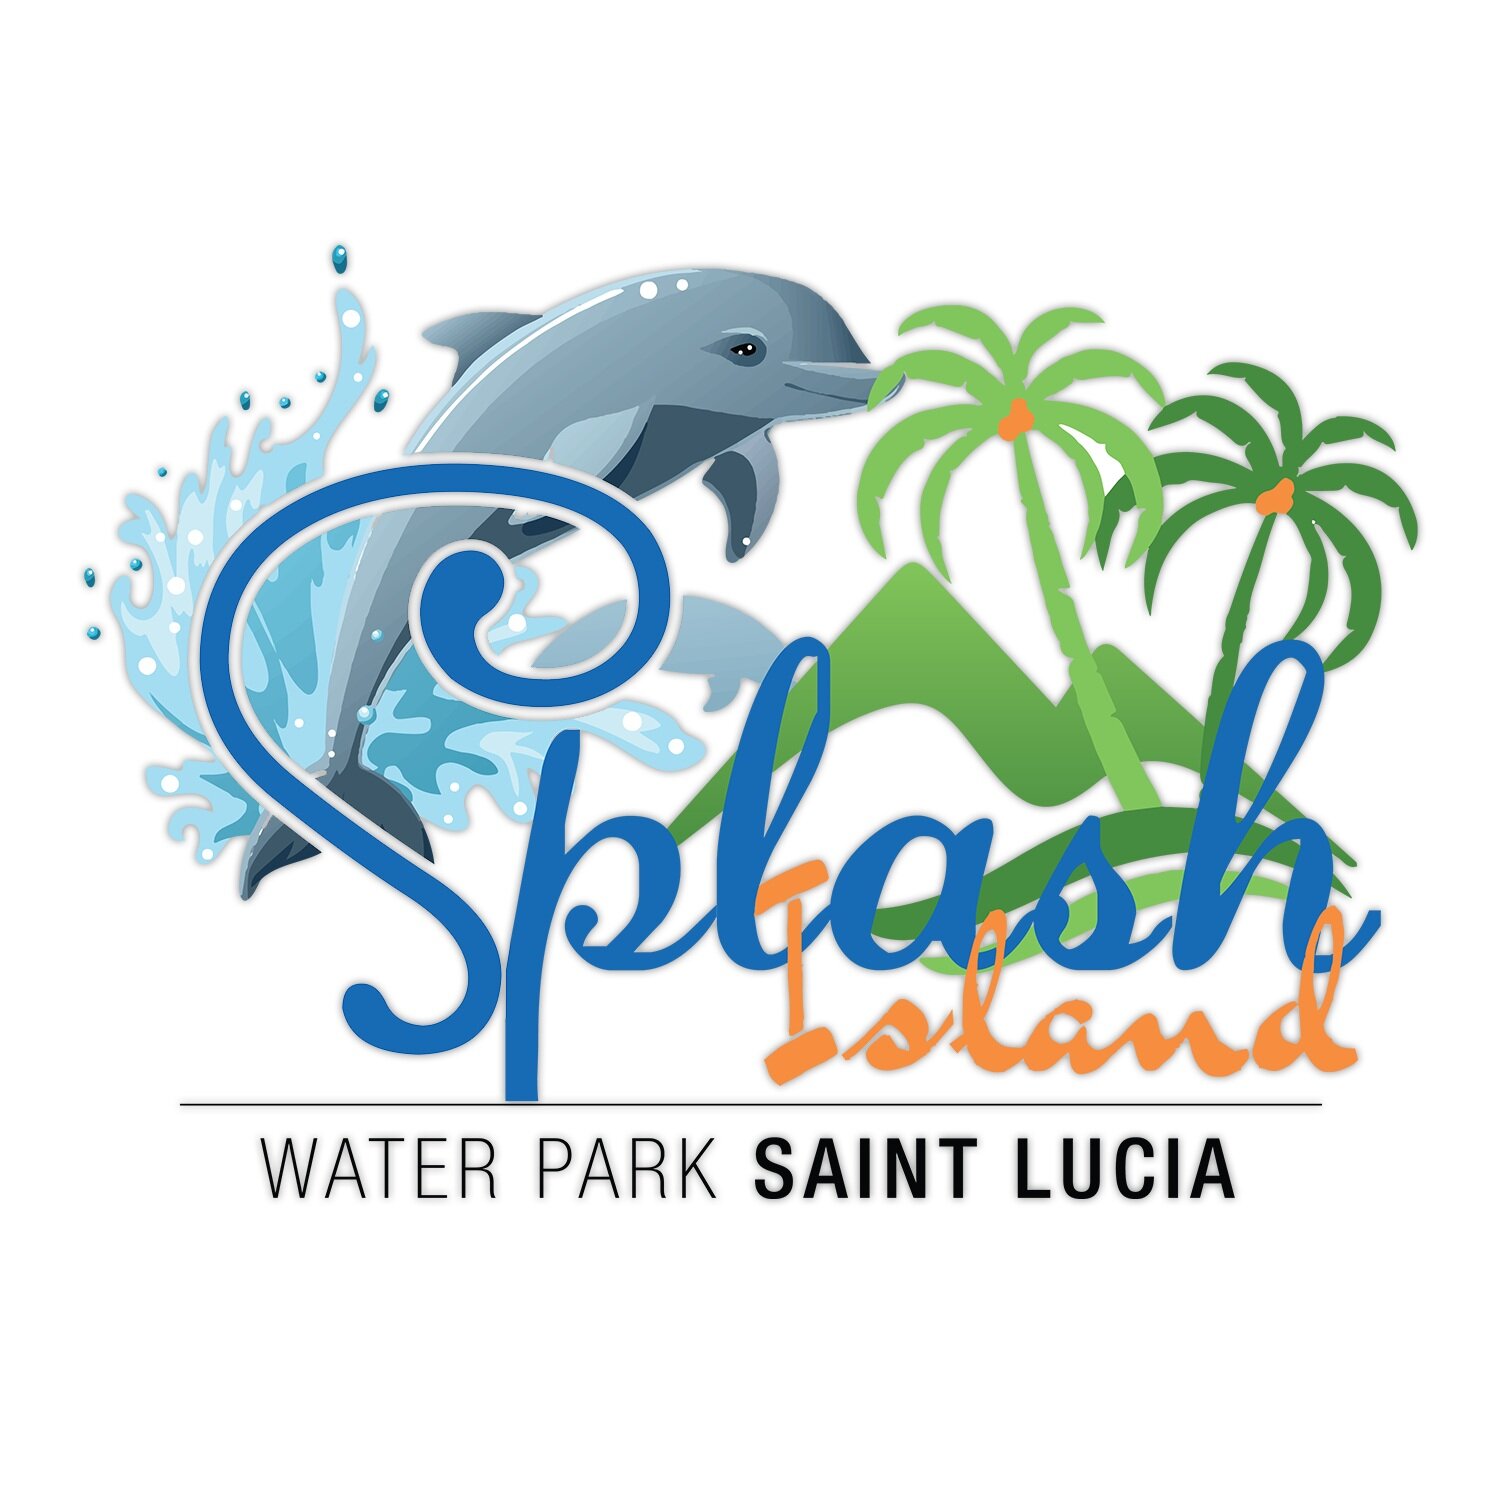 Caribbean Water Park Saint Lucia - Splash Island Water Park